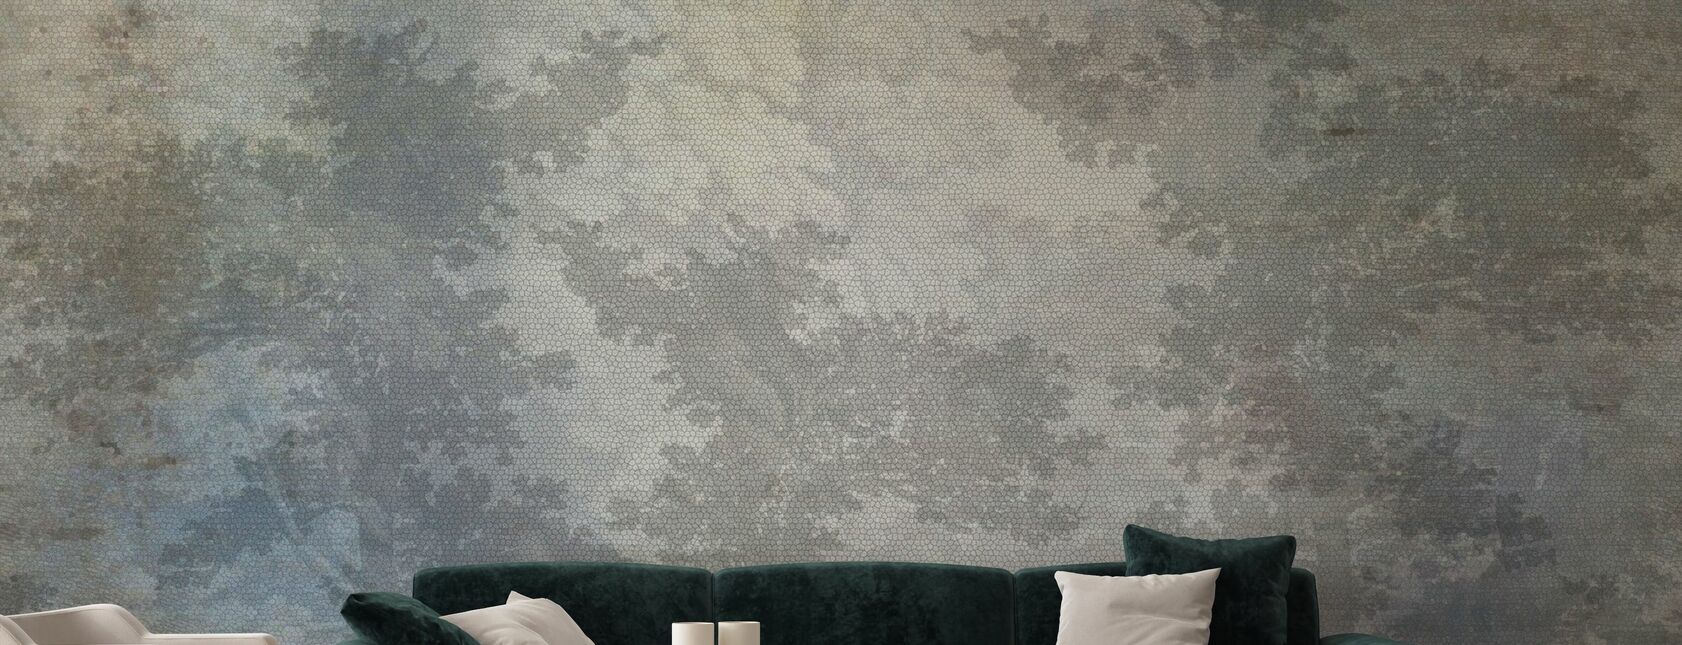 Lace - Vintage - Wallpaper - Living Room